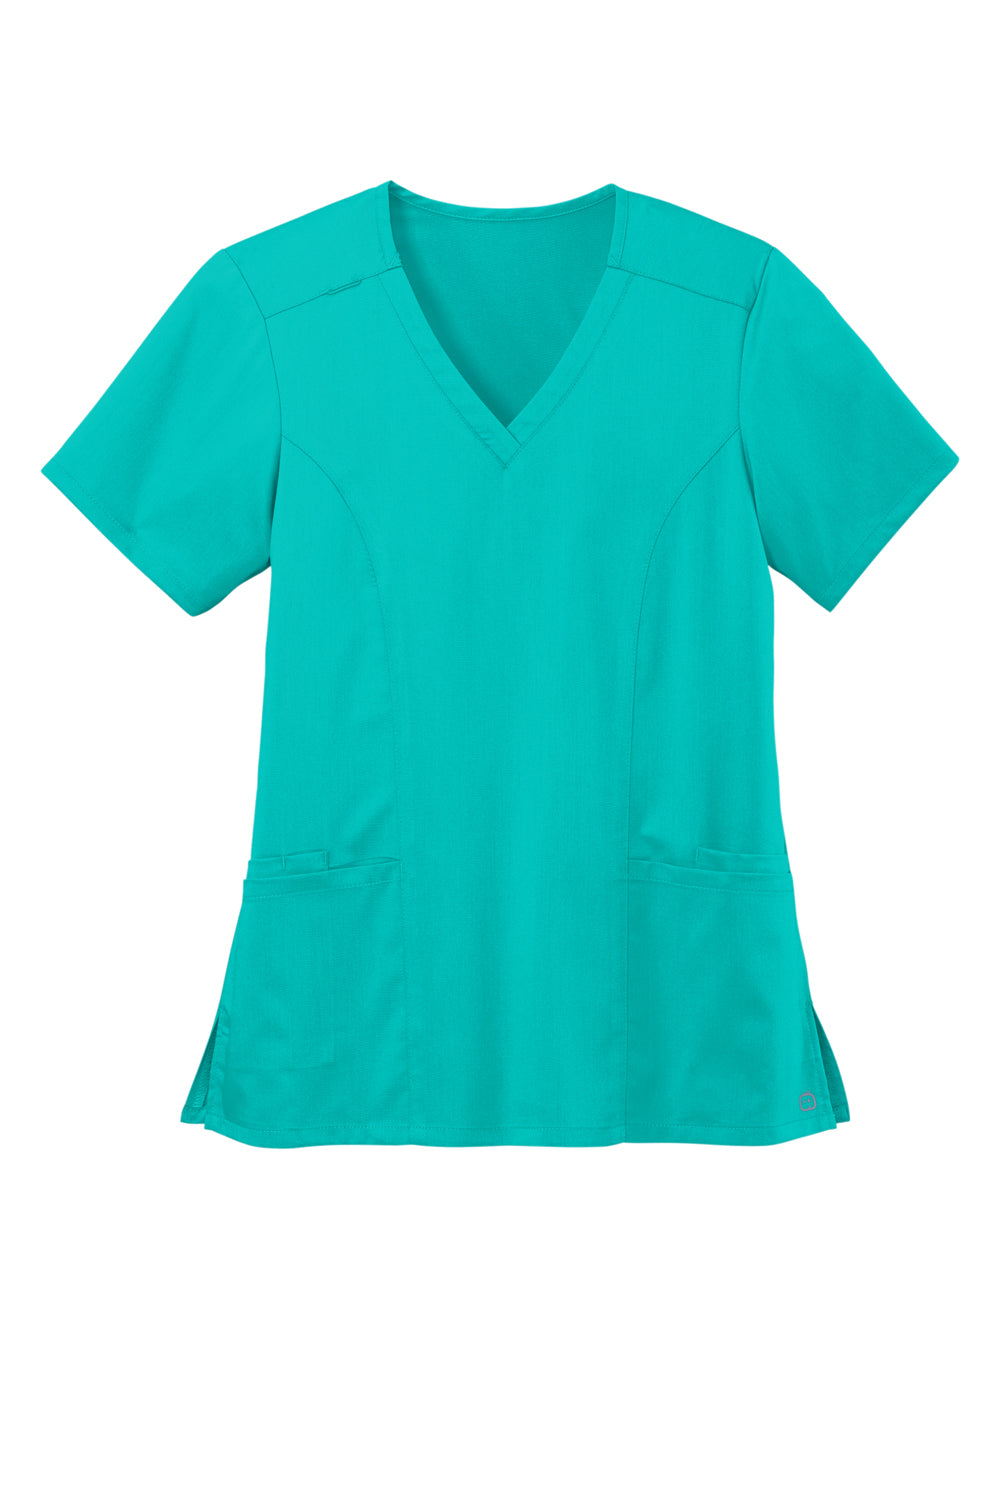 Wonderwink WW4168 Premiere Flex Short Sleeve V-Neck Shirt w/ Pockets Teal Blue Flat Front